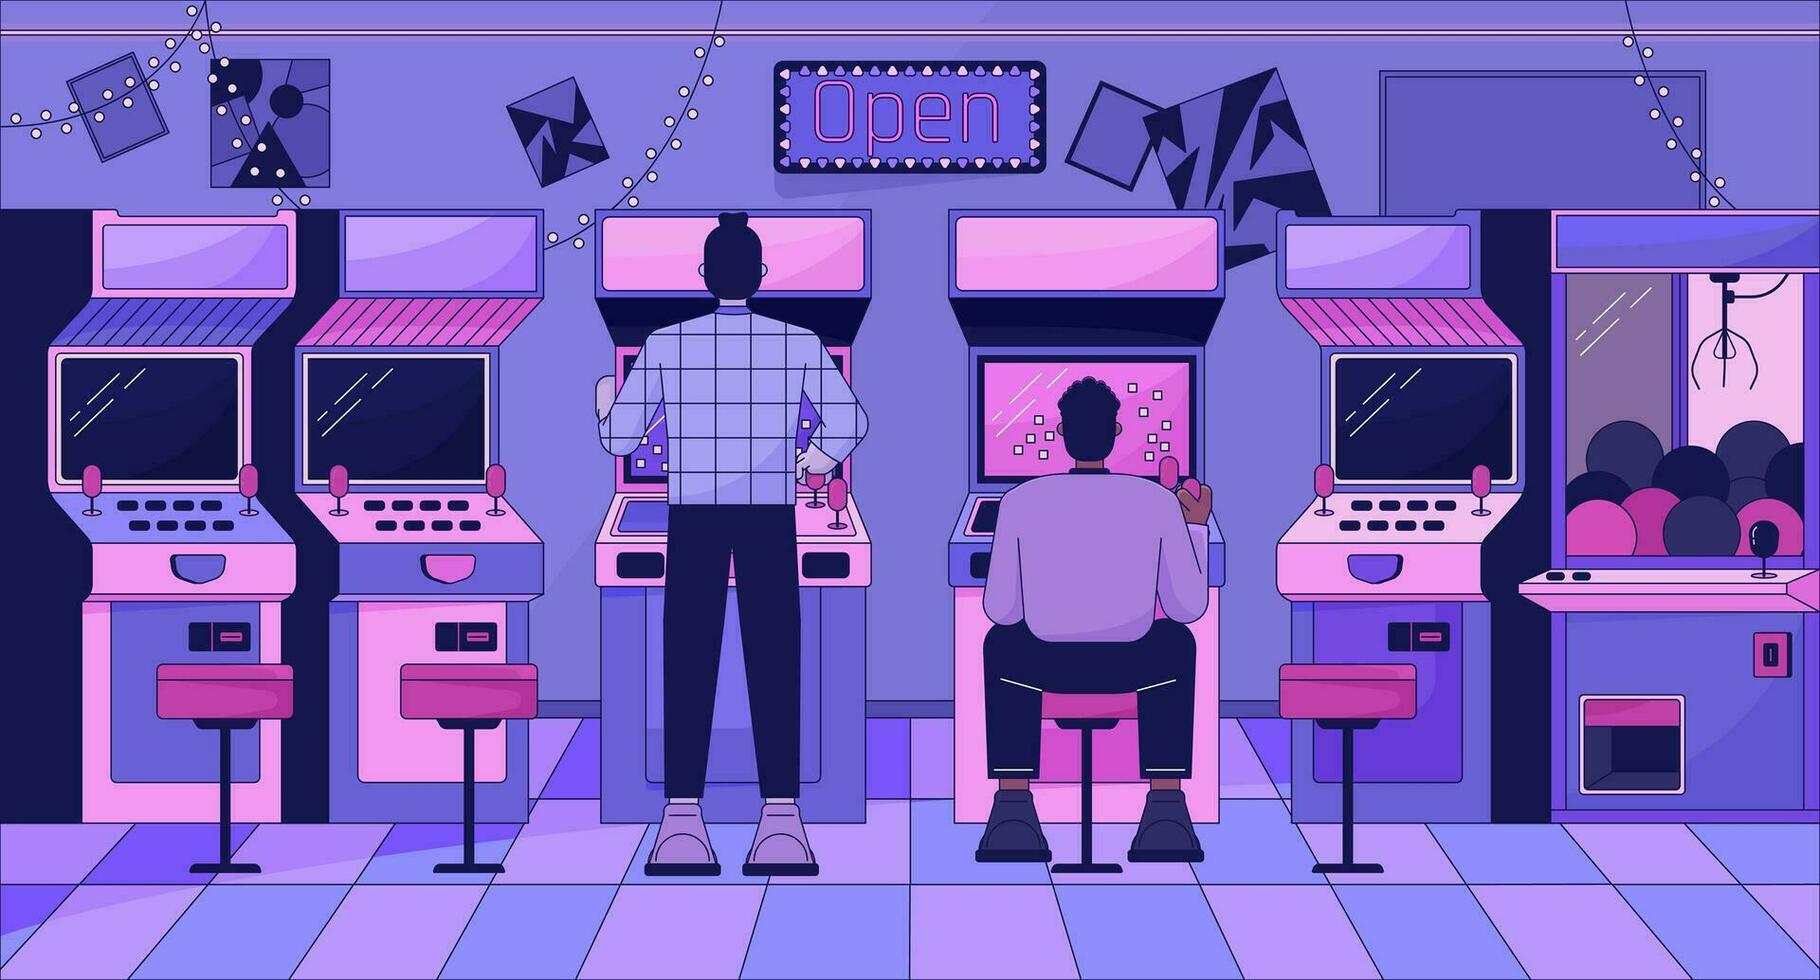 Arcade video gaming lo fi aesthetic wallpaper. Men playing games. Old school machines 2D vector cartoon objects illustration, purple lofi background. 90s retro album art, chill vibes